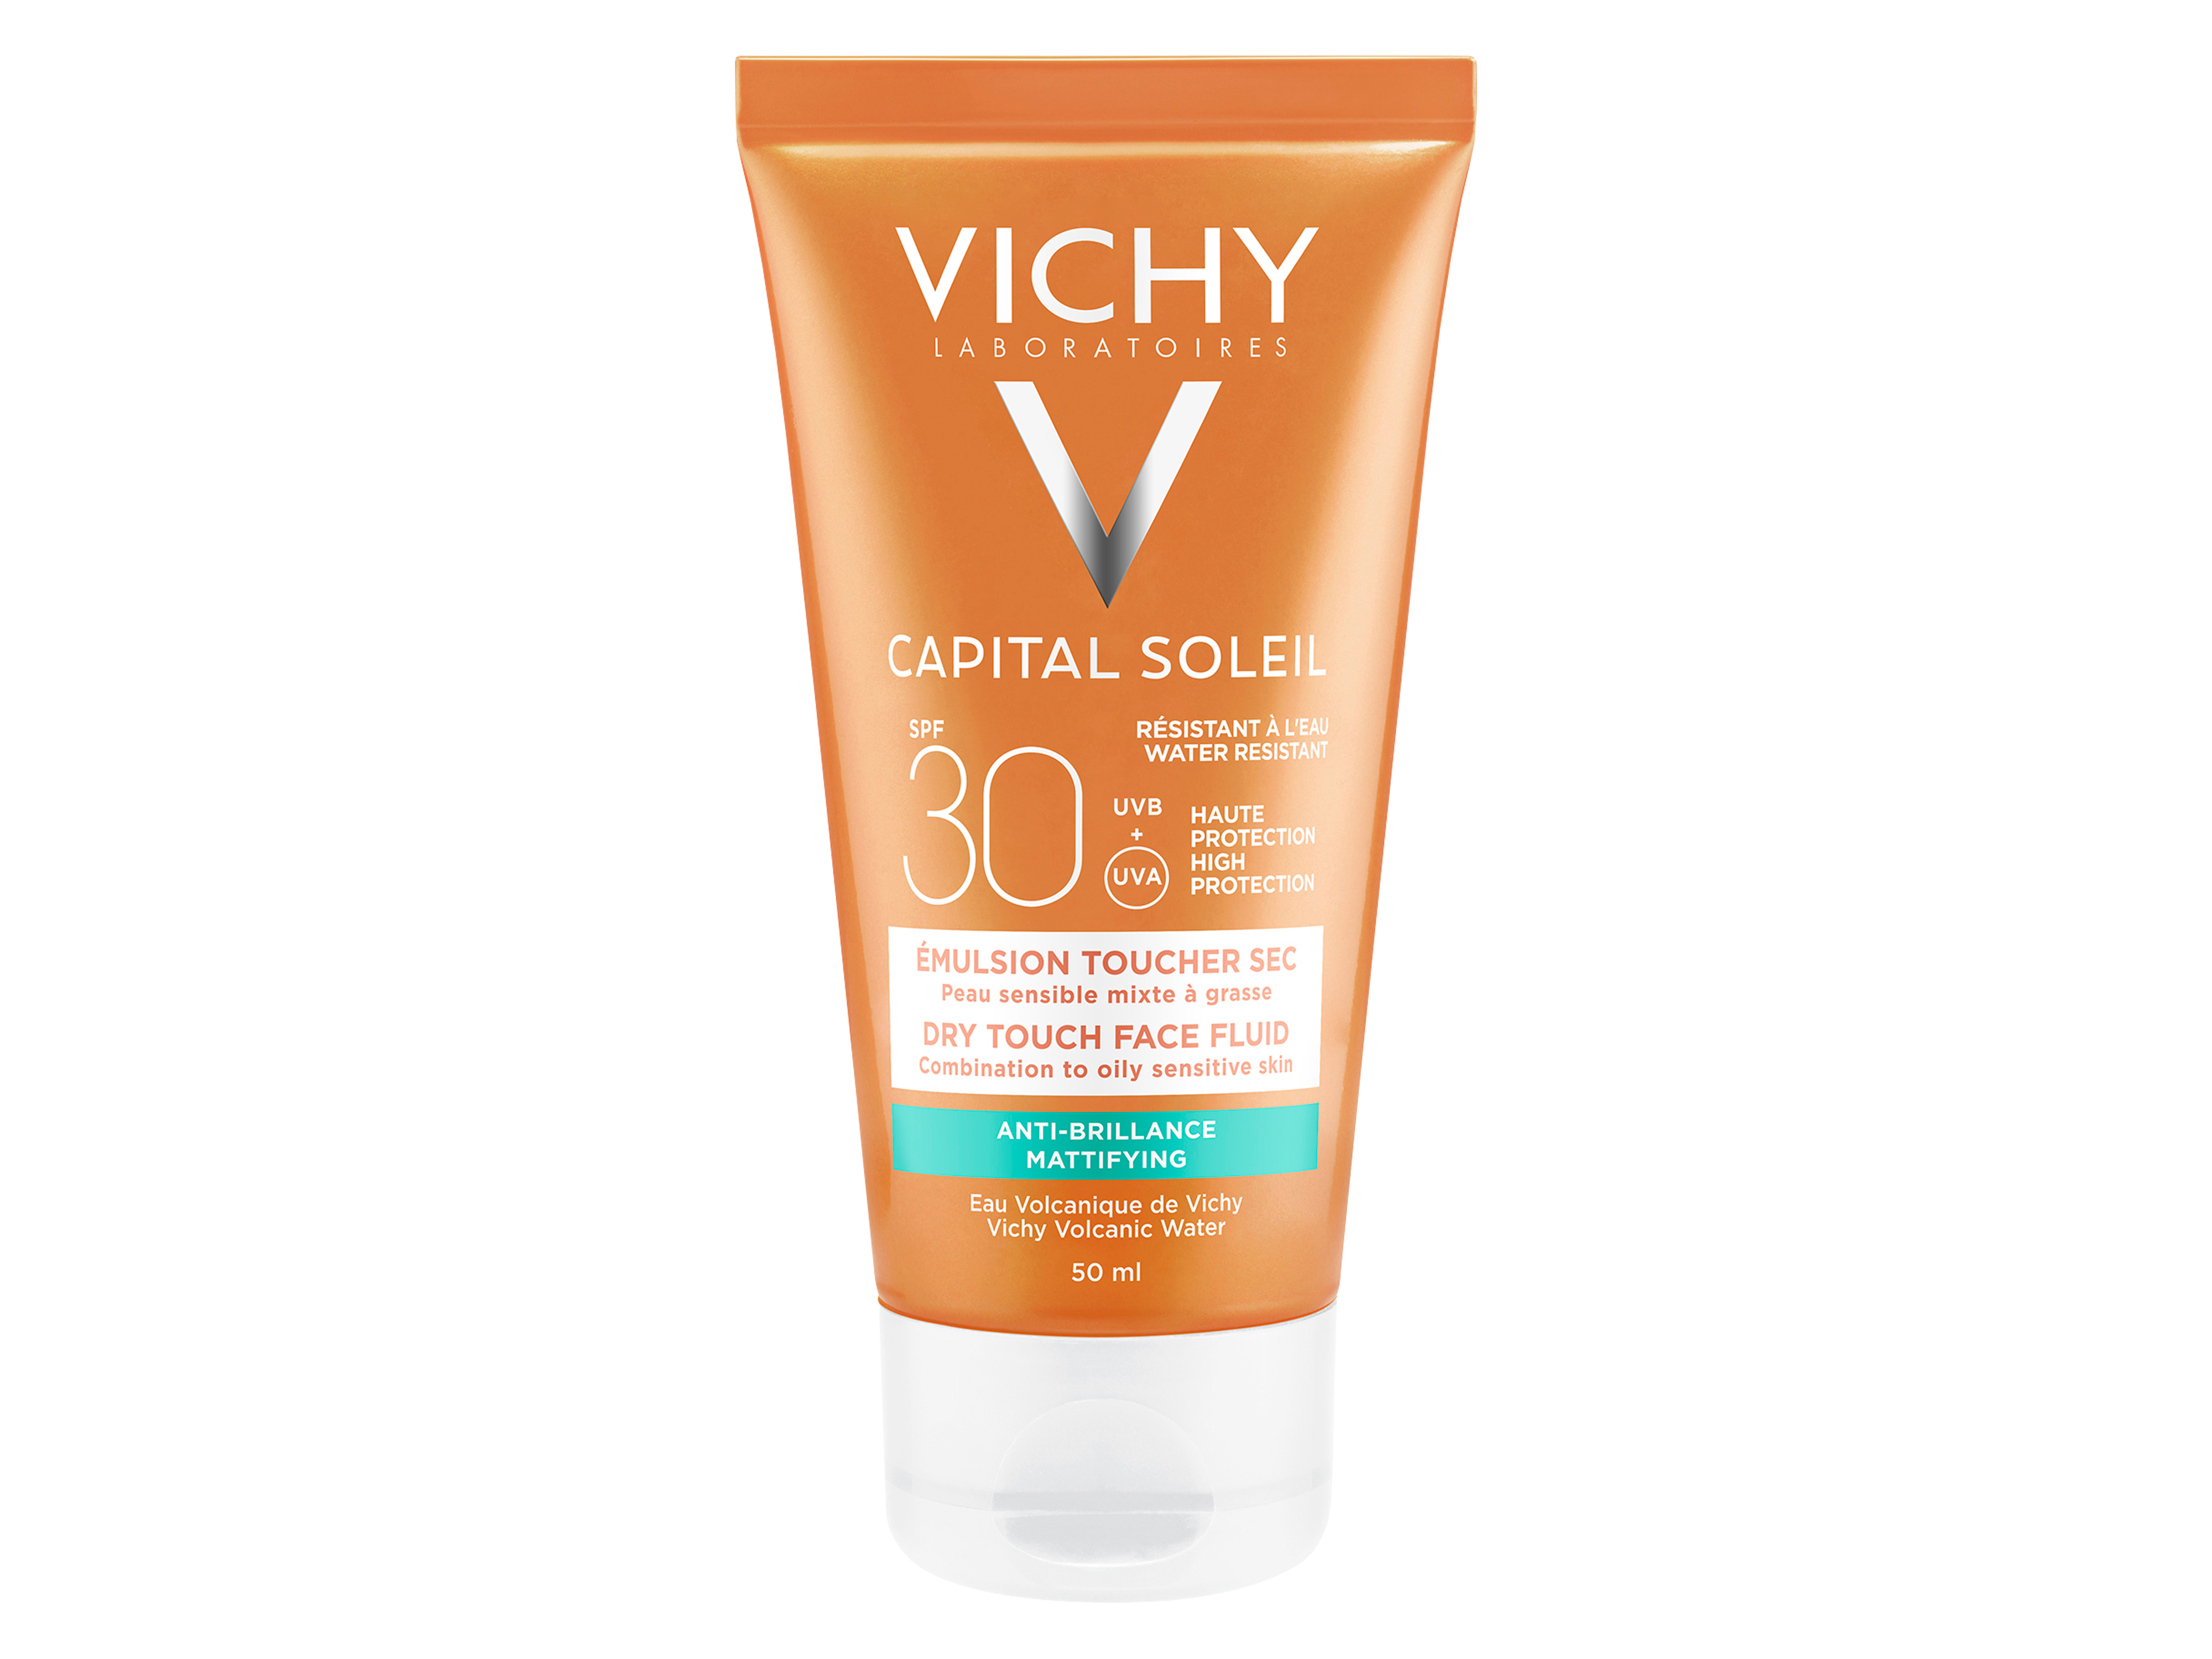 Vichy Capital Soleil Dry Touch Protective Face Fluid SPF30, 50 ml